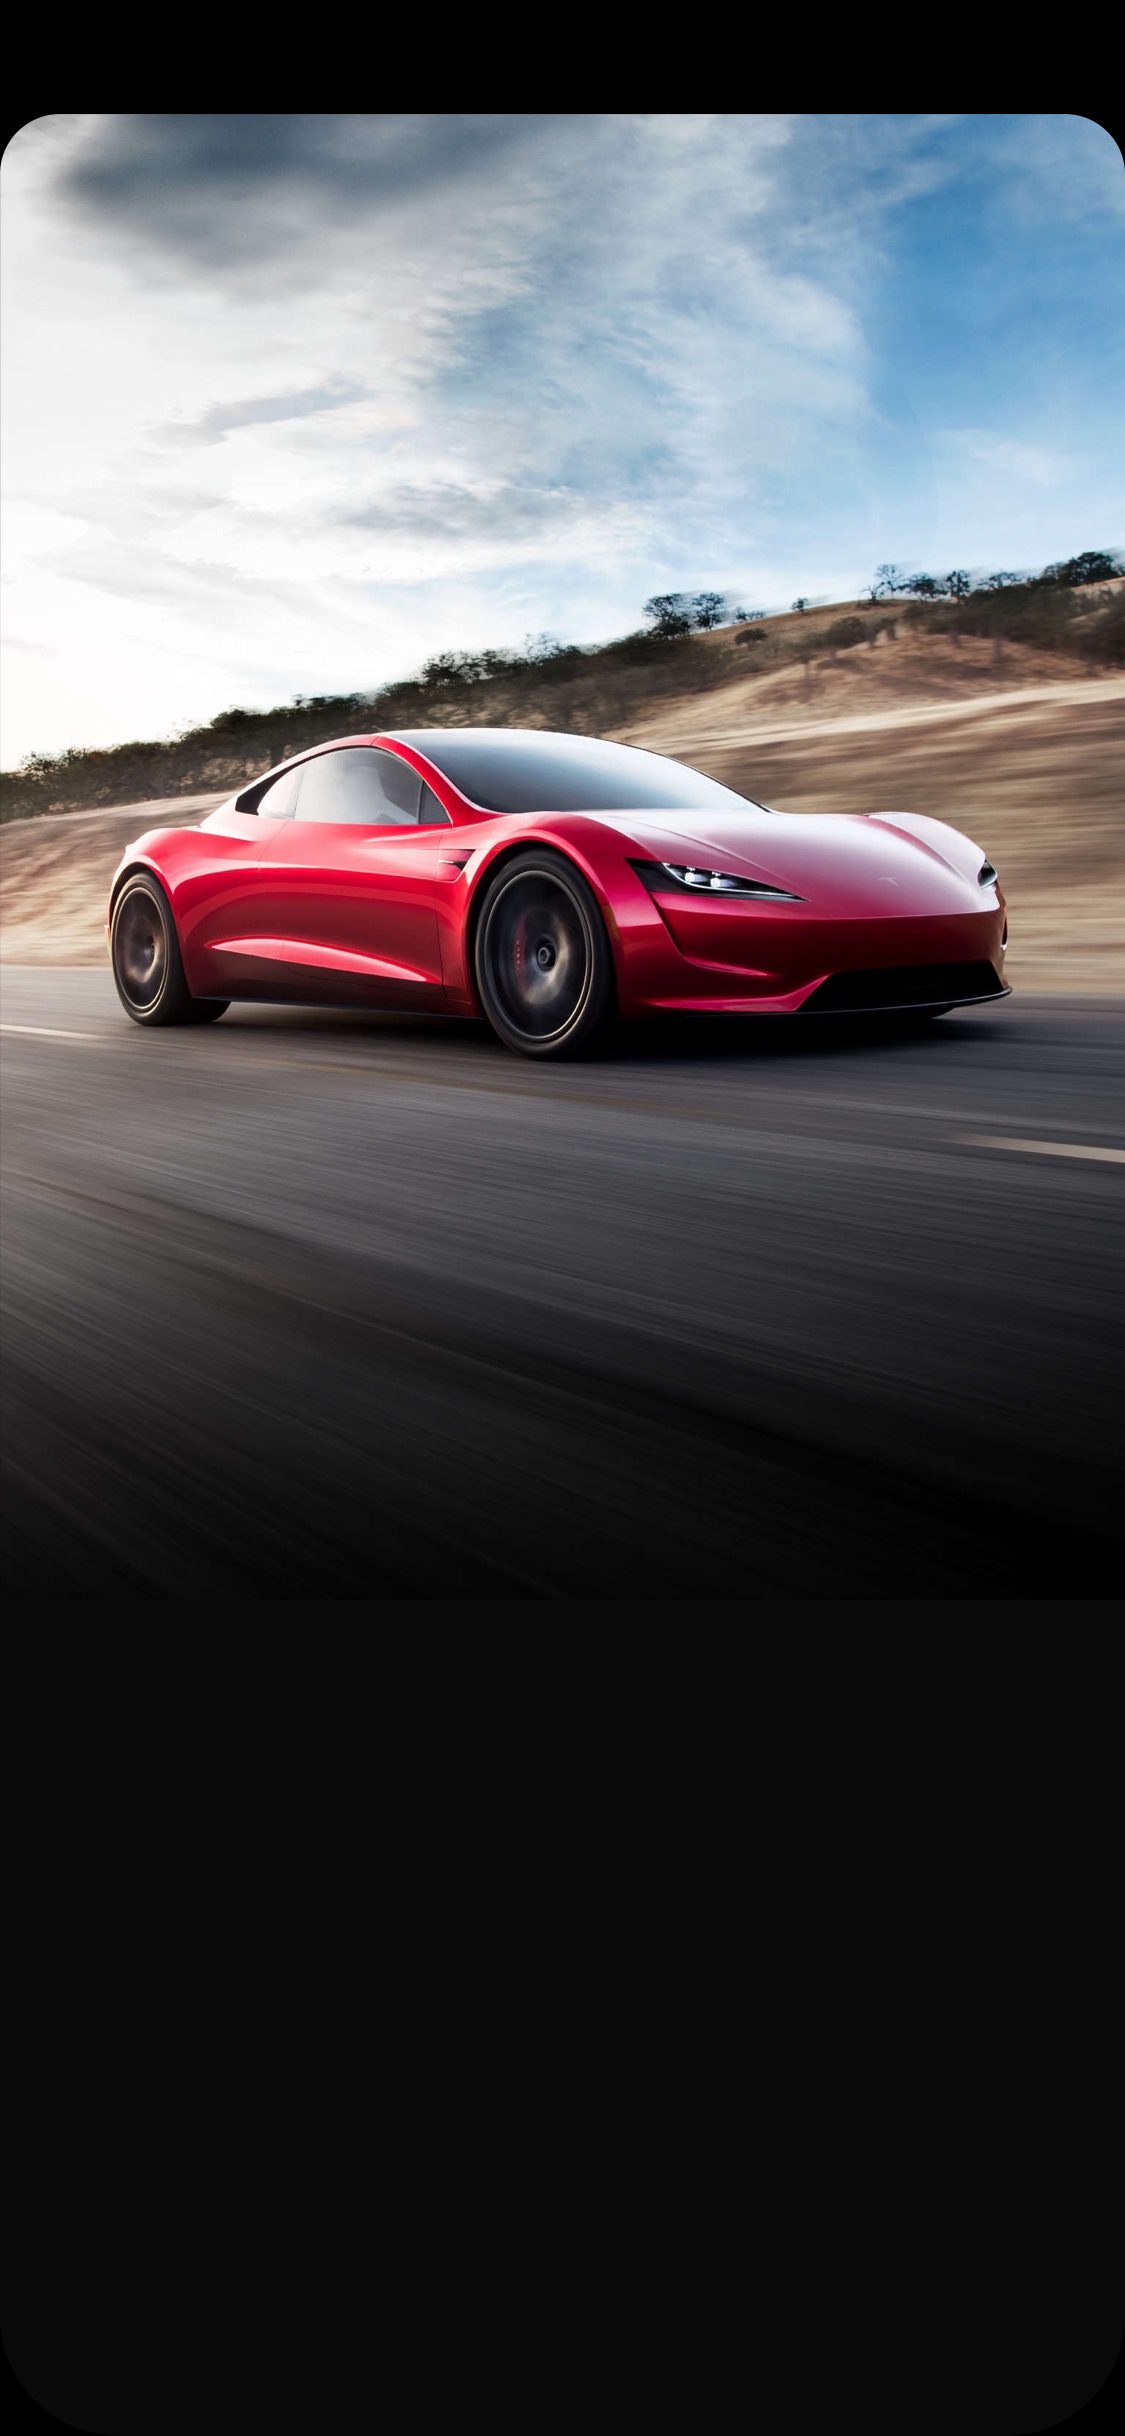 Tesla Roadster 2020 Wallpapers For iPhone X iPad And Mac   iOS Hacker